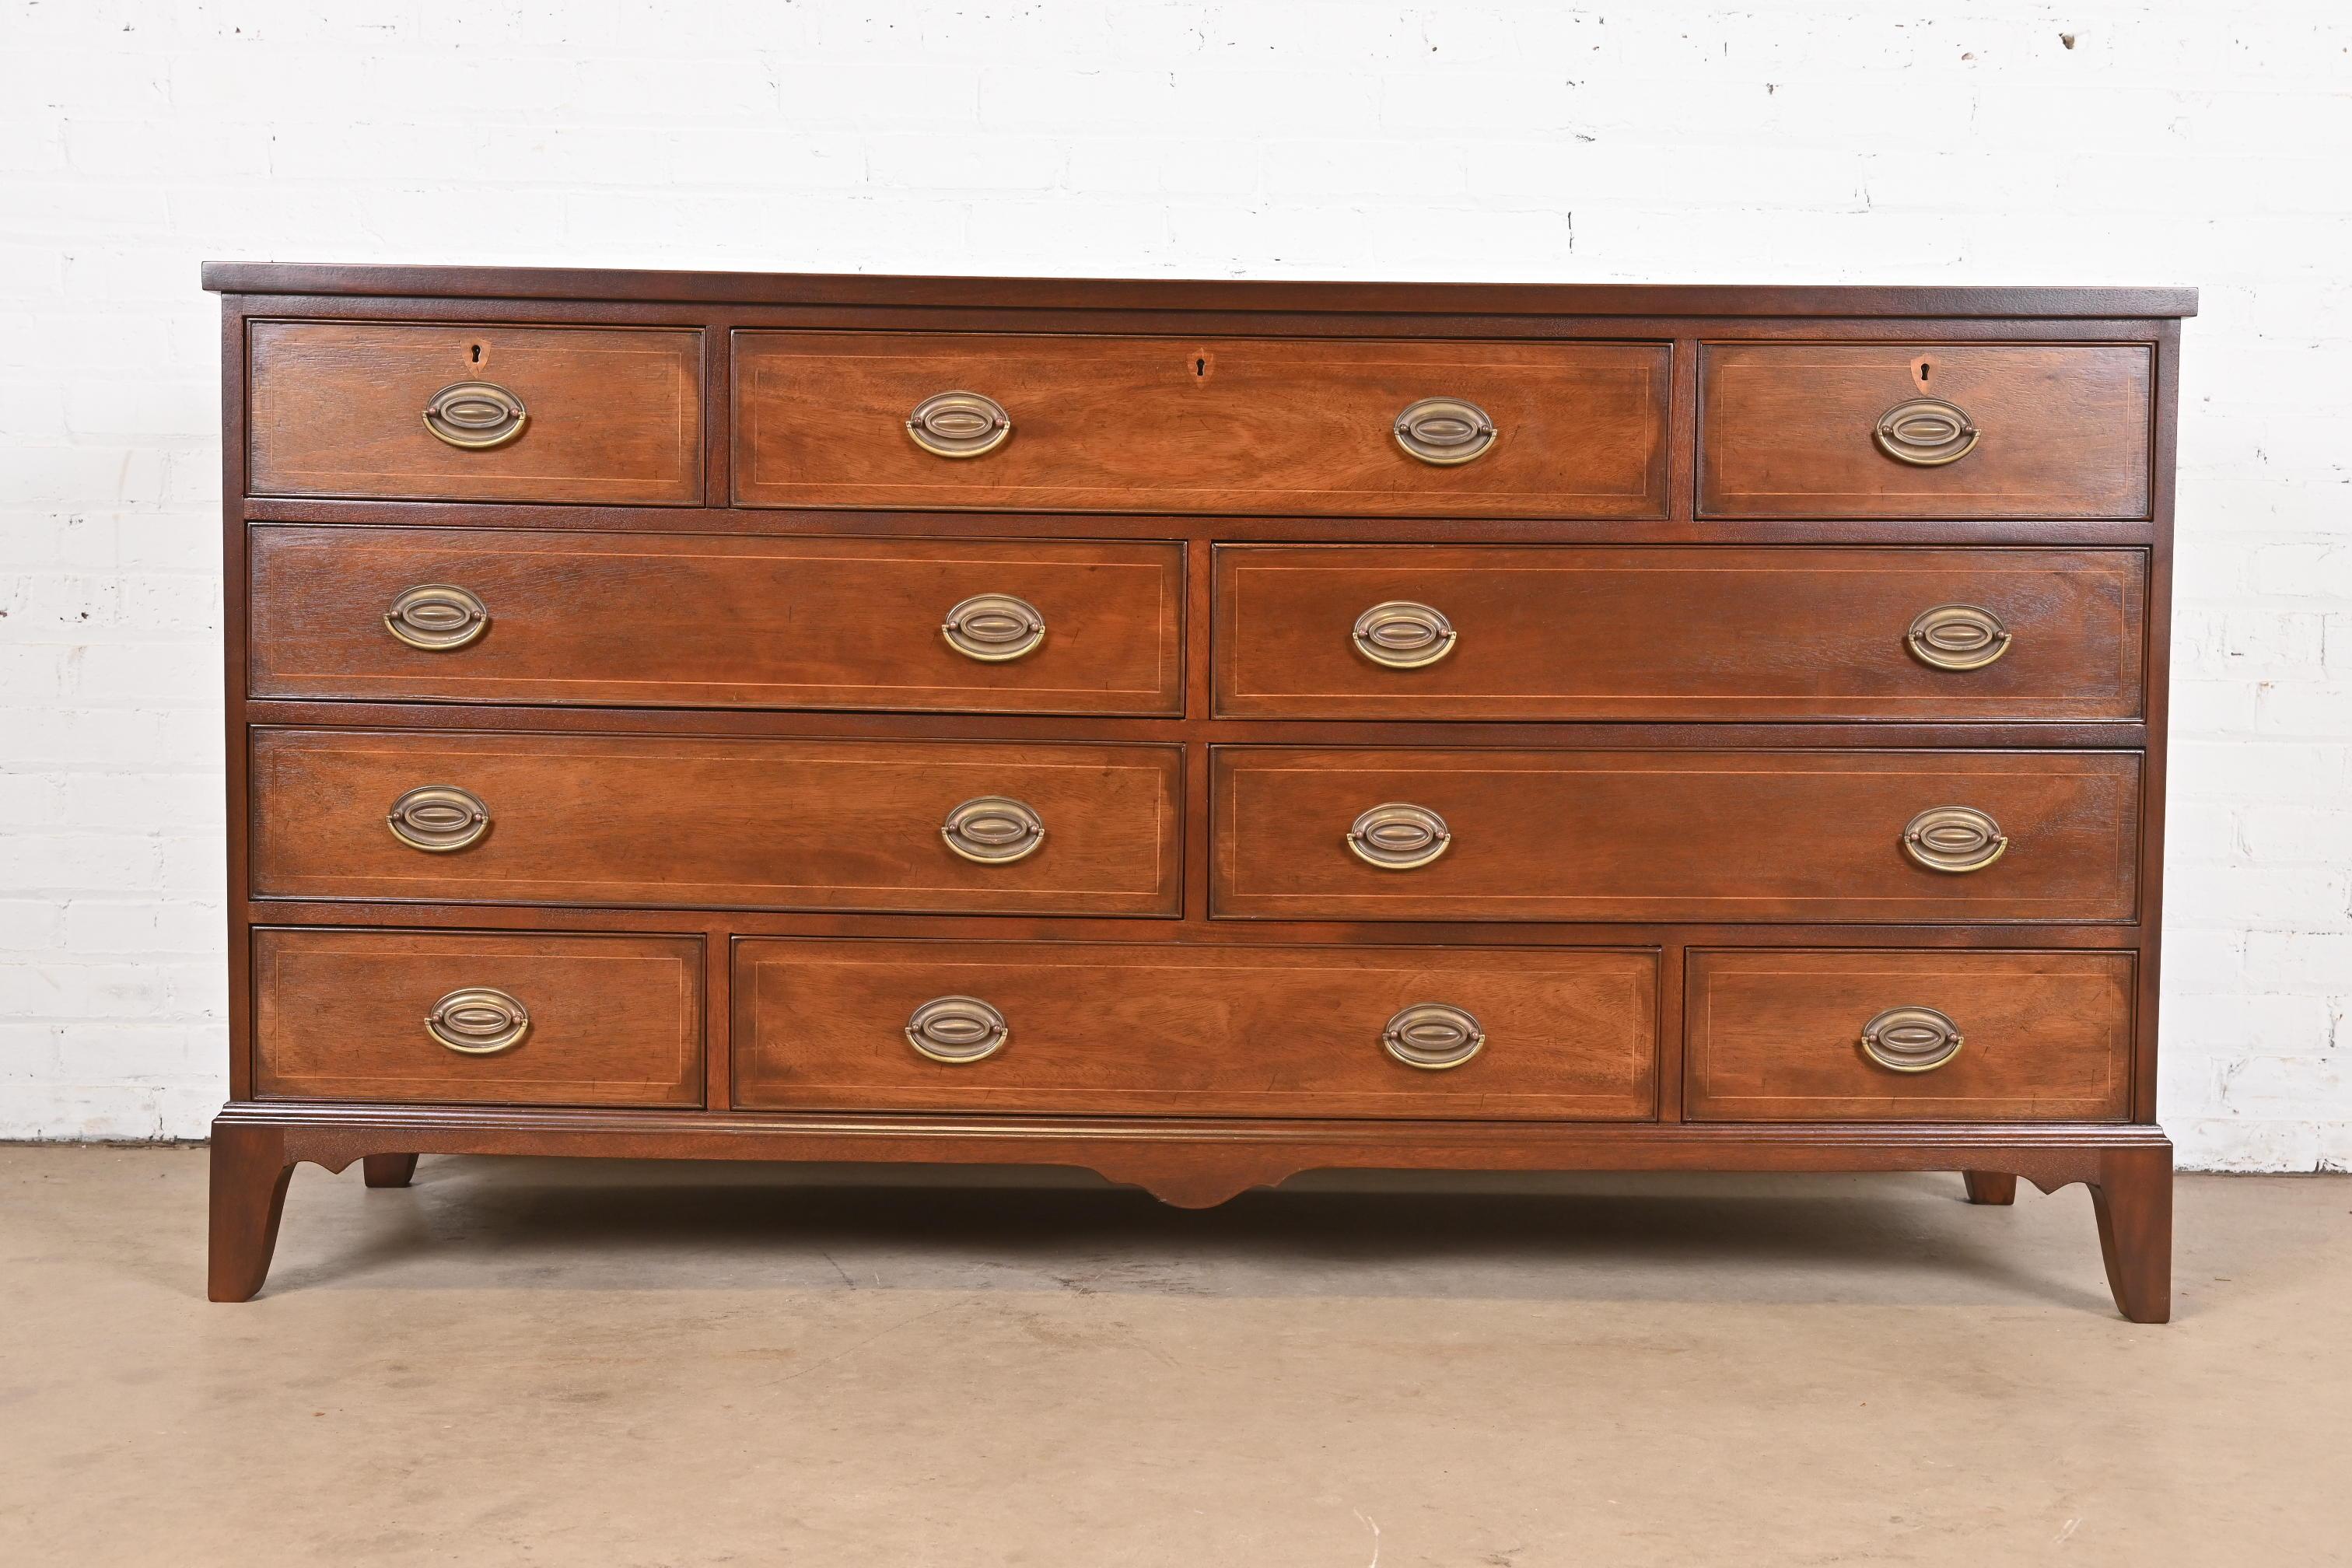 Américain Kittinger Federal Inlaid Mahogany Ten-Drawer Dresser, Newly Refinished (en anglais) en vente